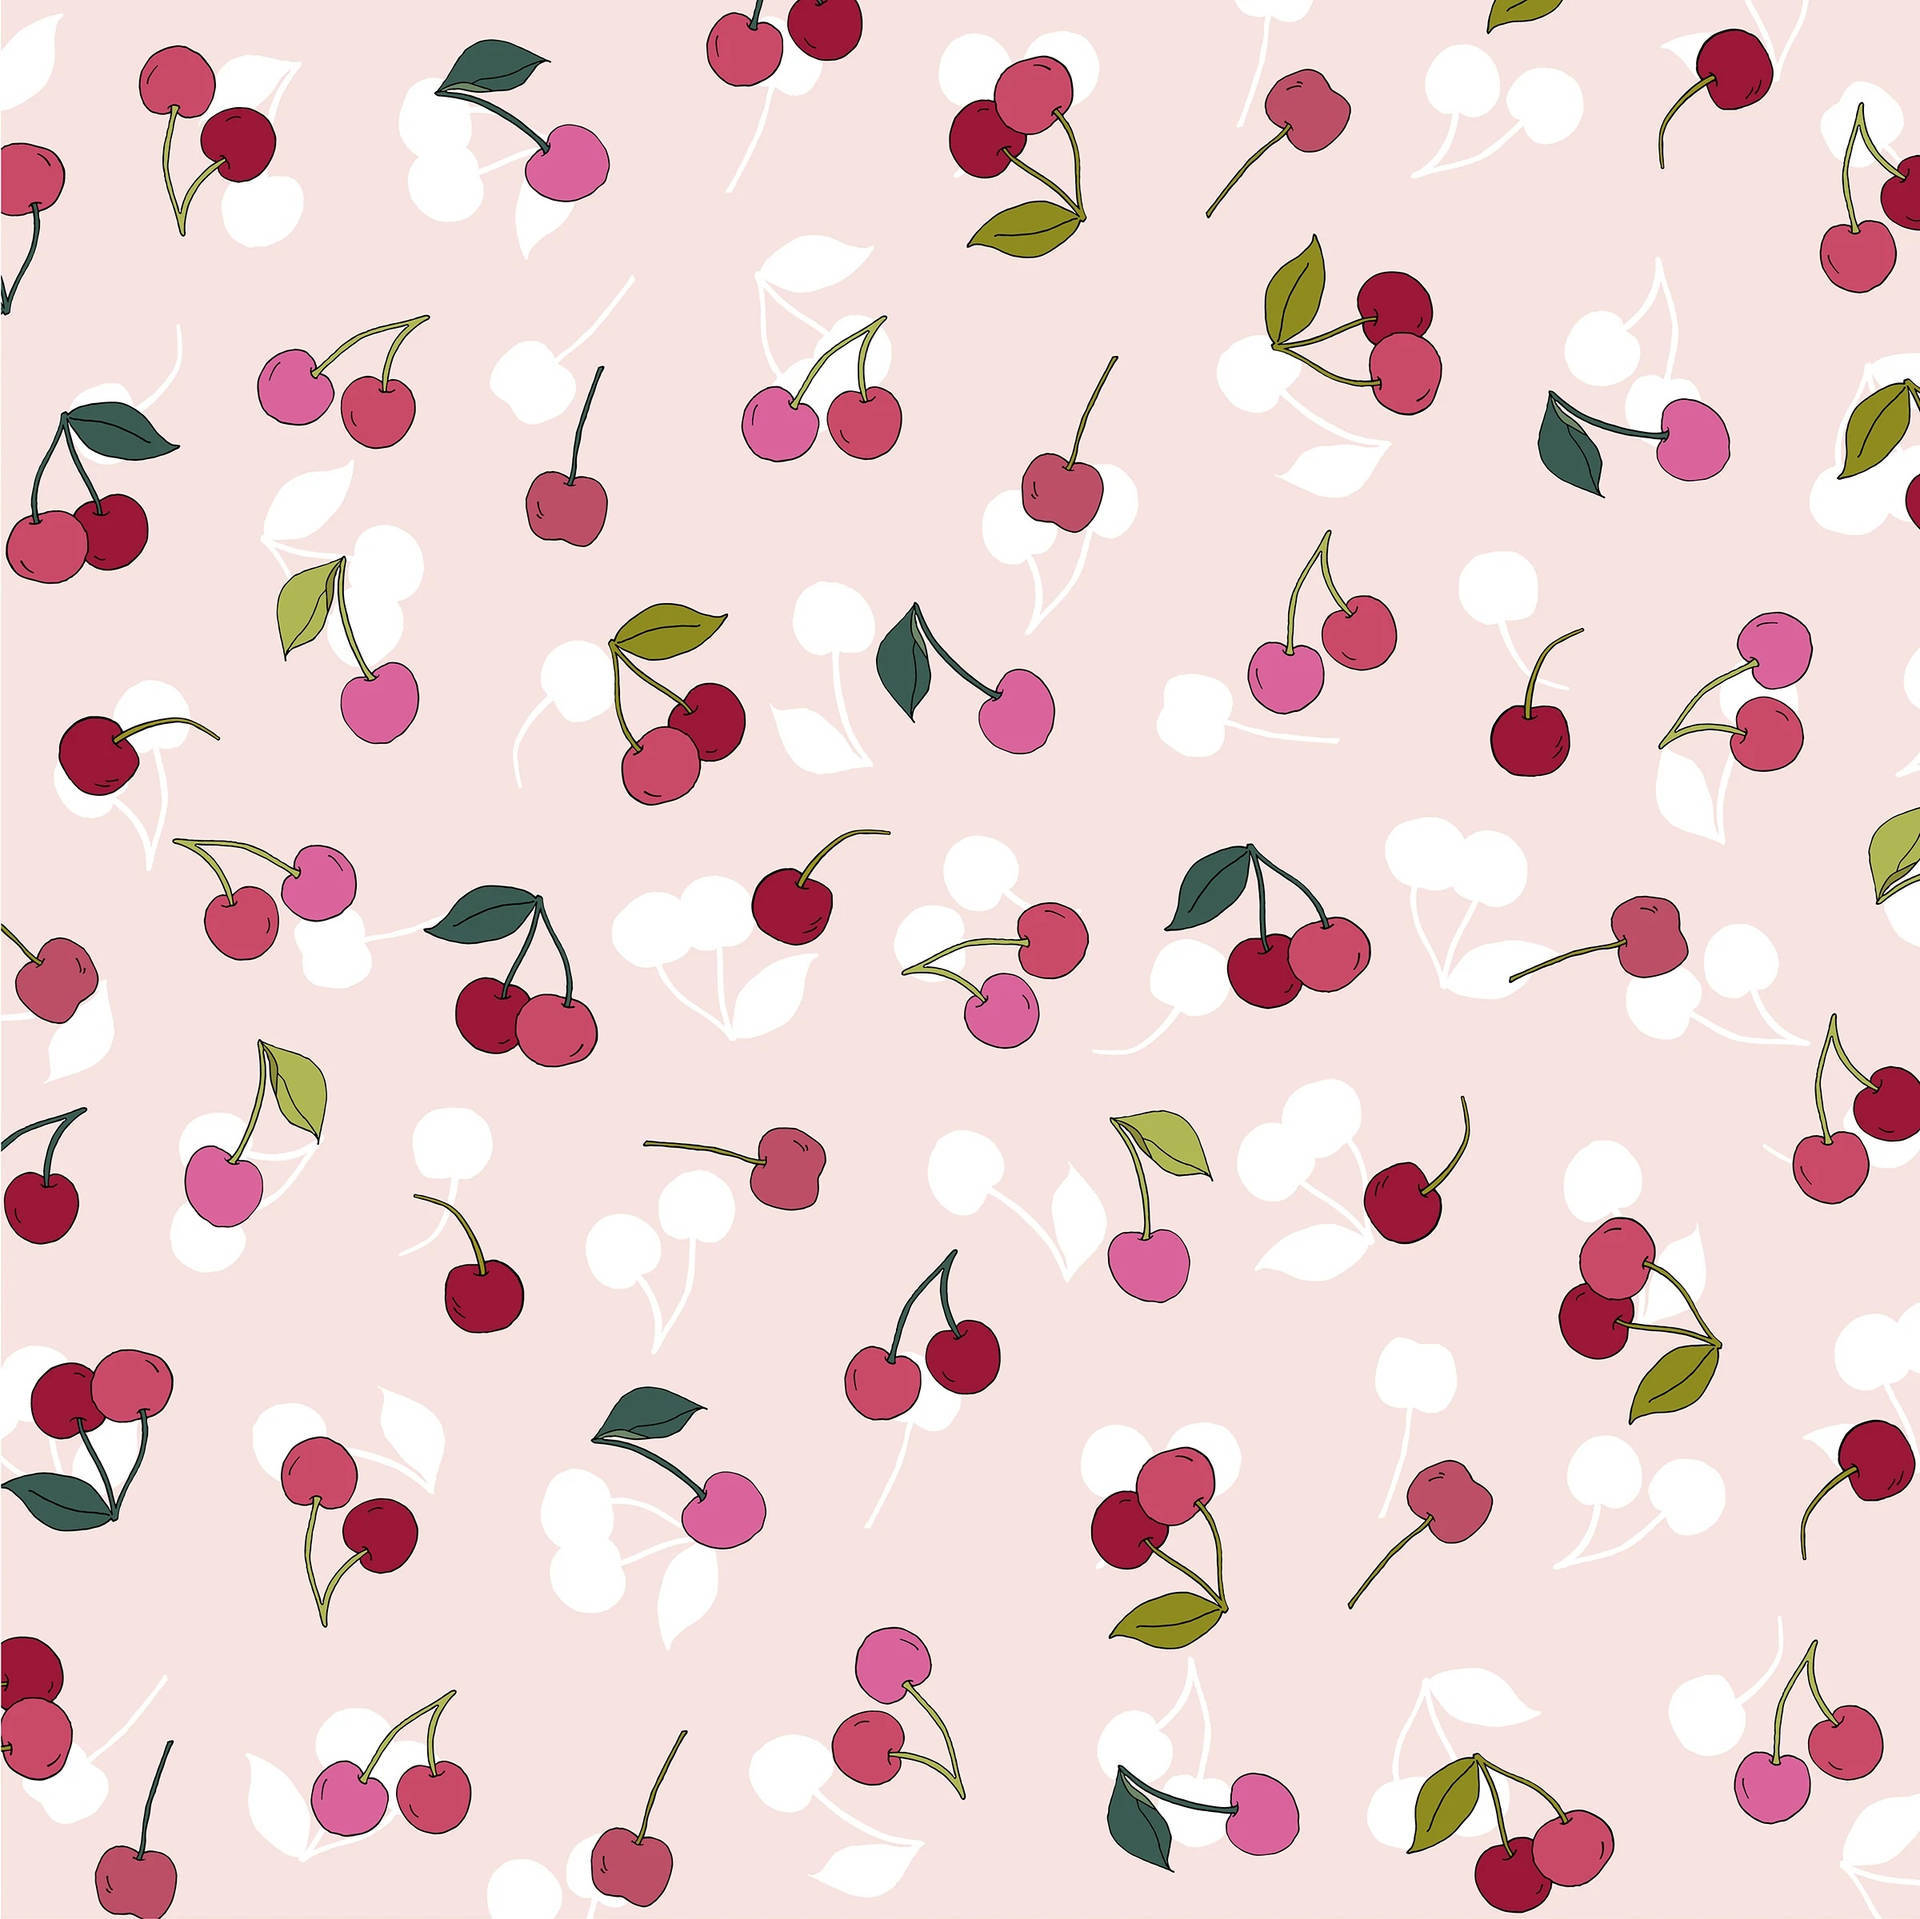 Ipad Pro Cute Cherry Fruits